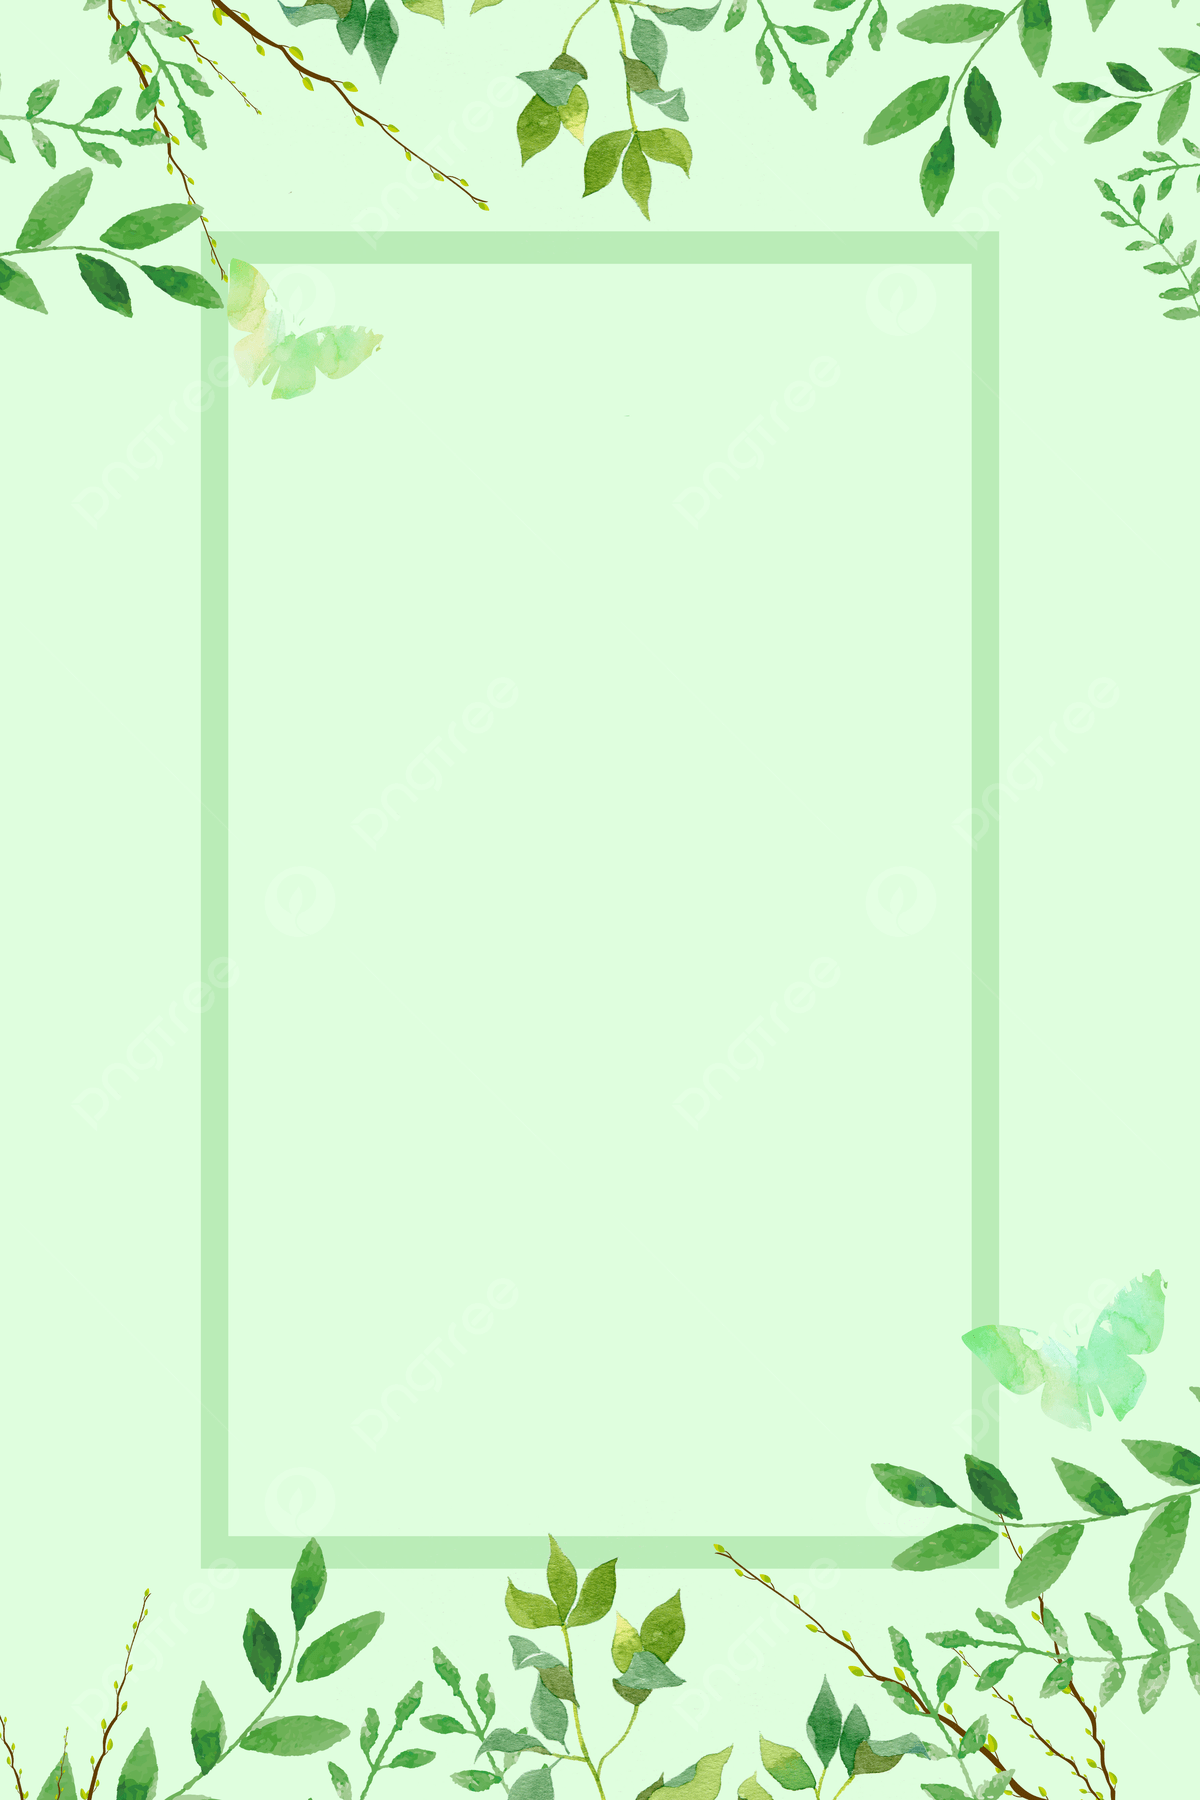 Spring Green Leaves Border H5 Background Wallpaper Image For Free Download